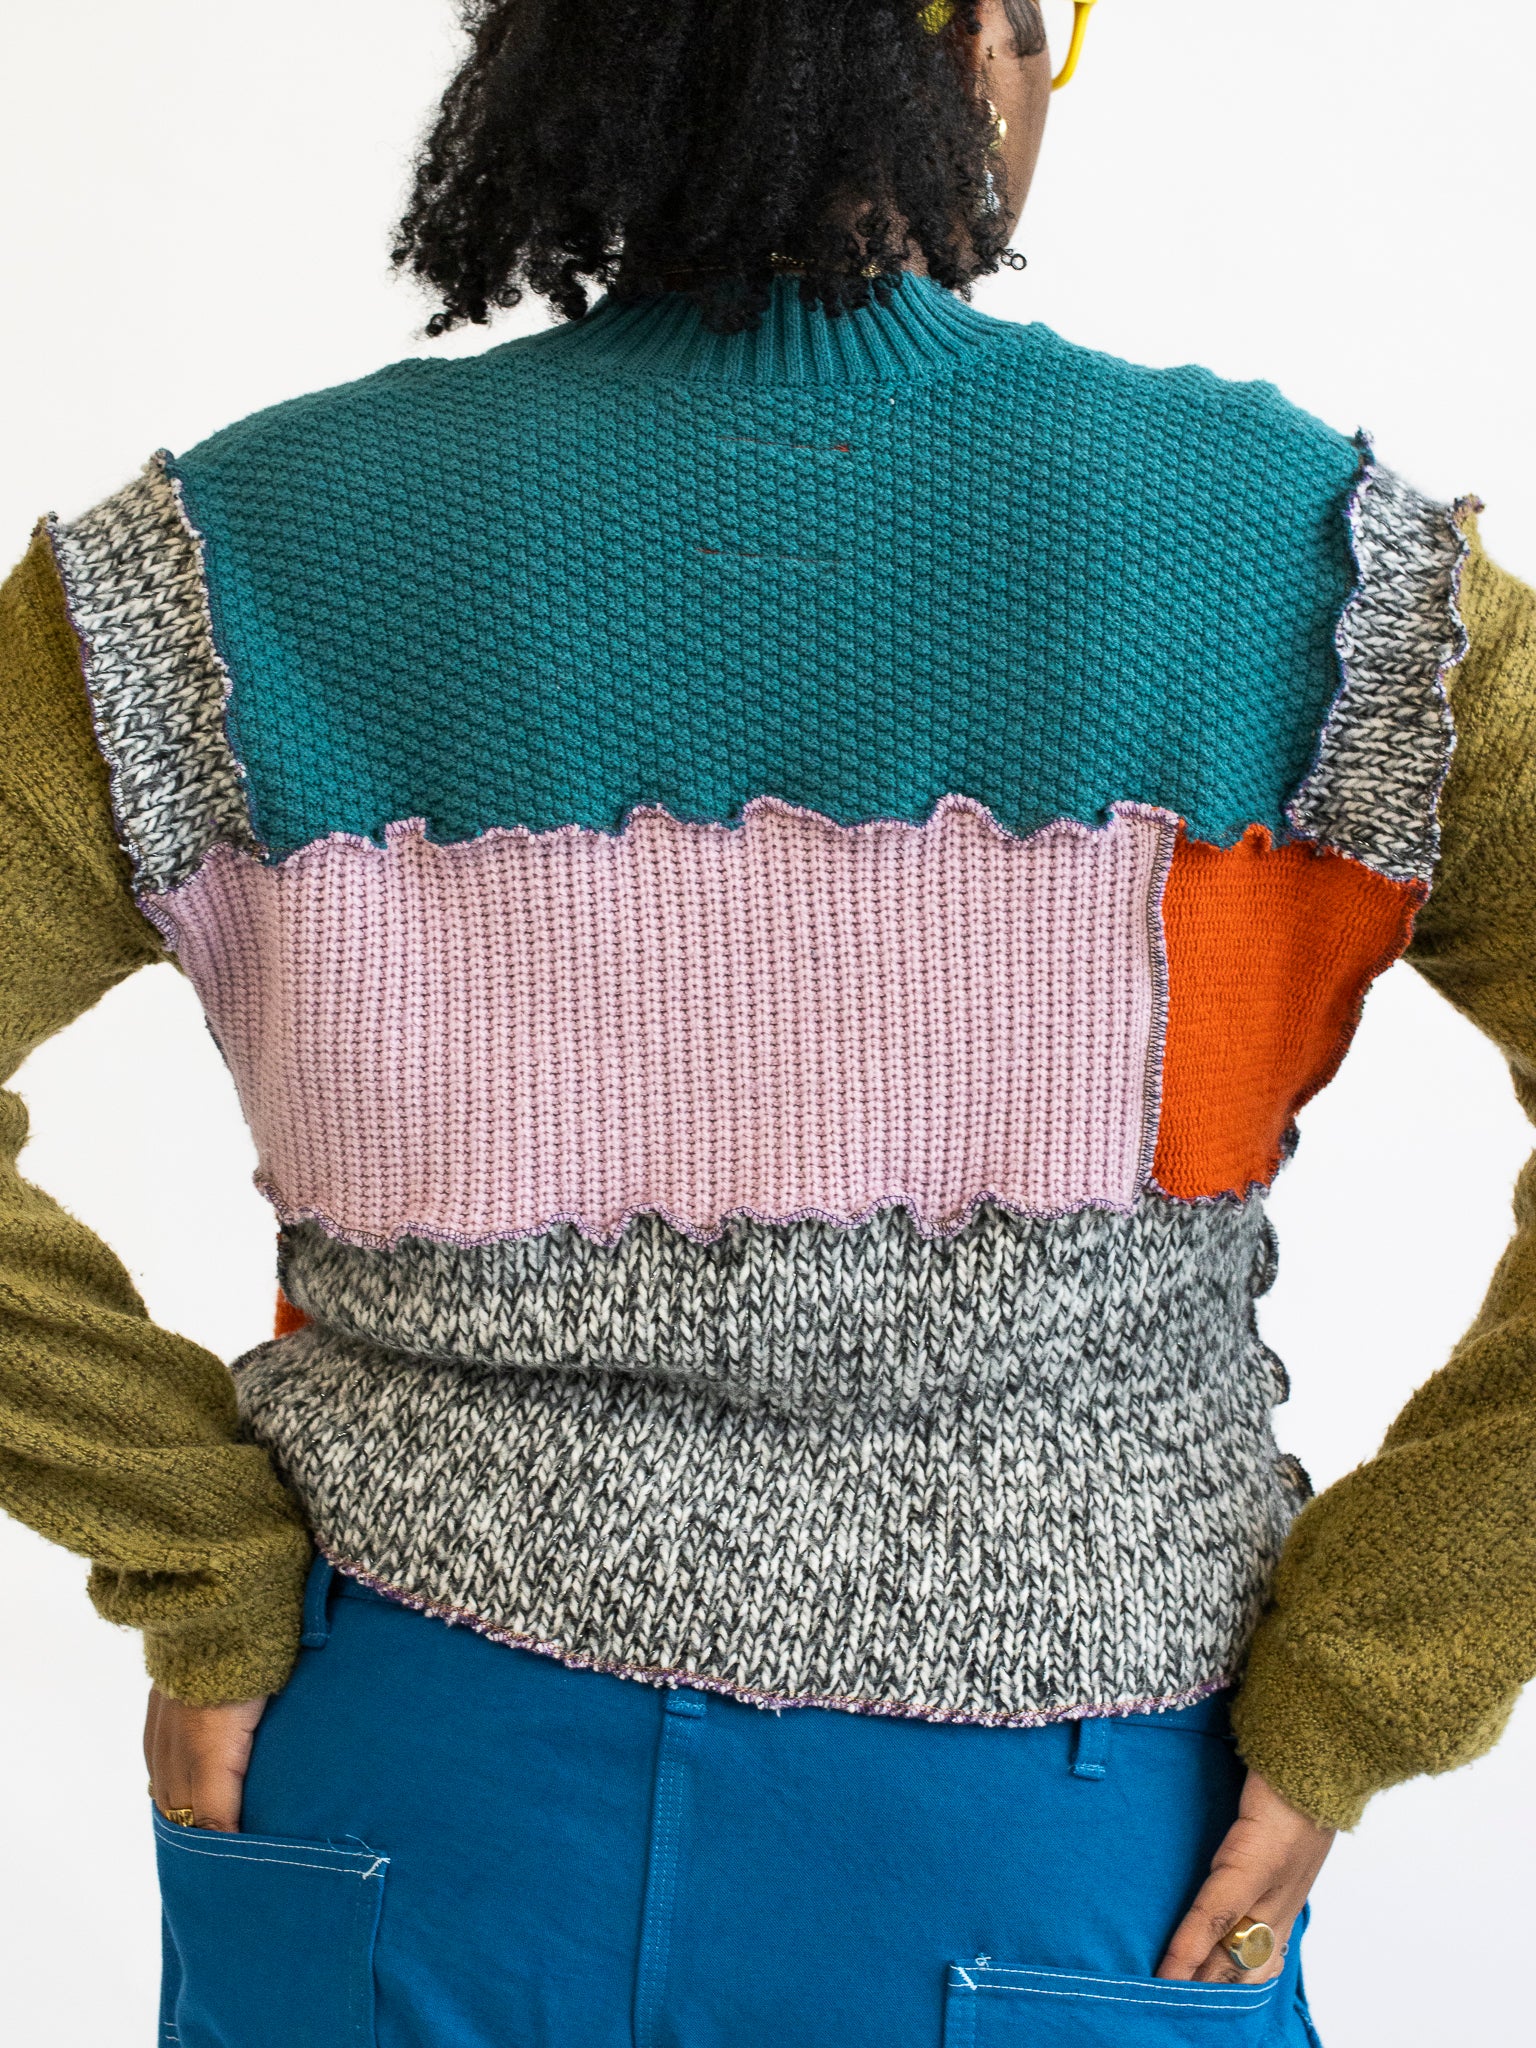 GrandMother Goods - “Groovy” Sweater (XL/1X)